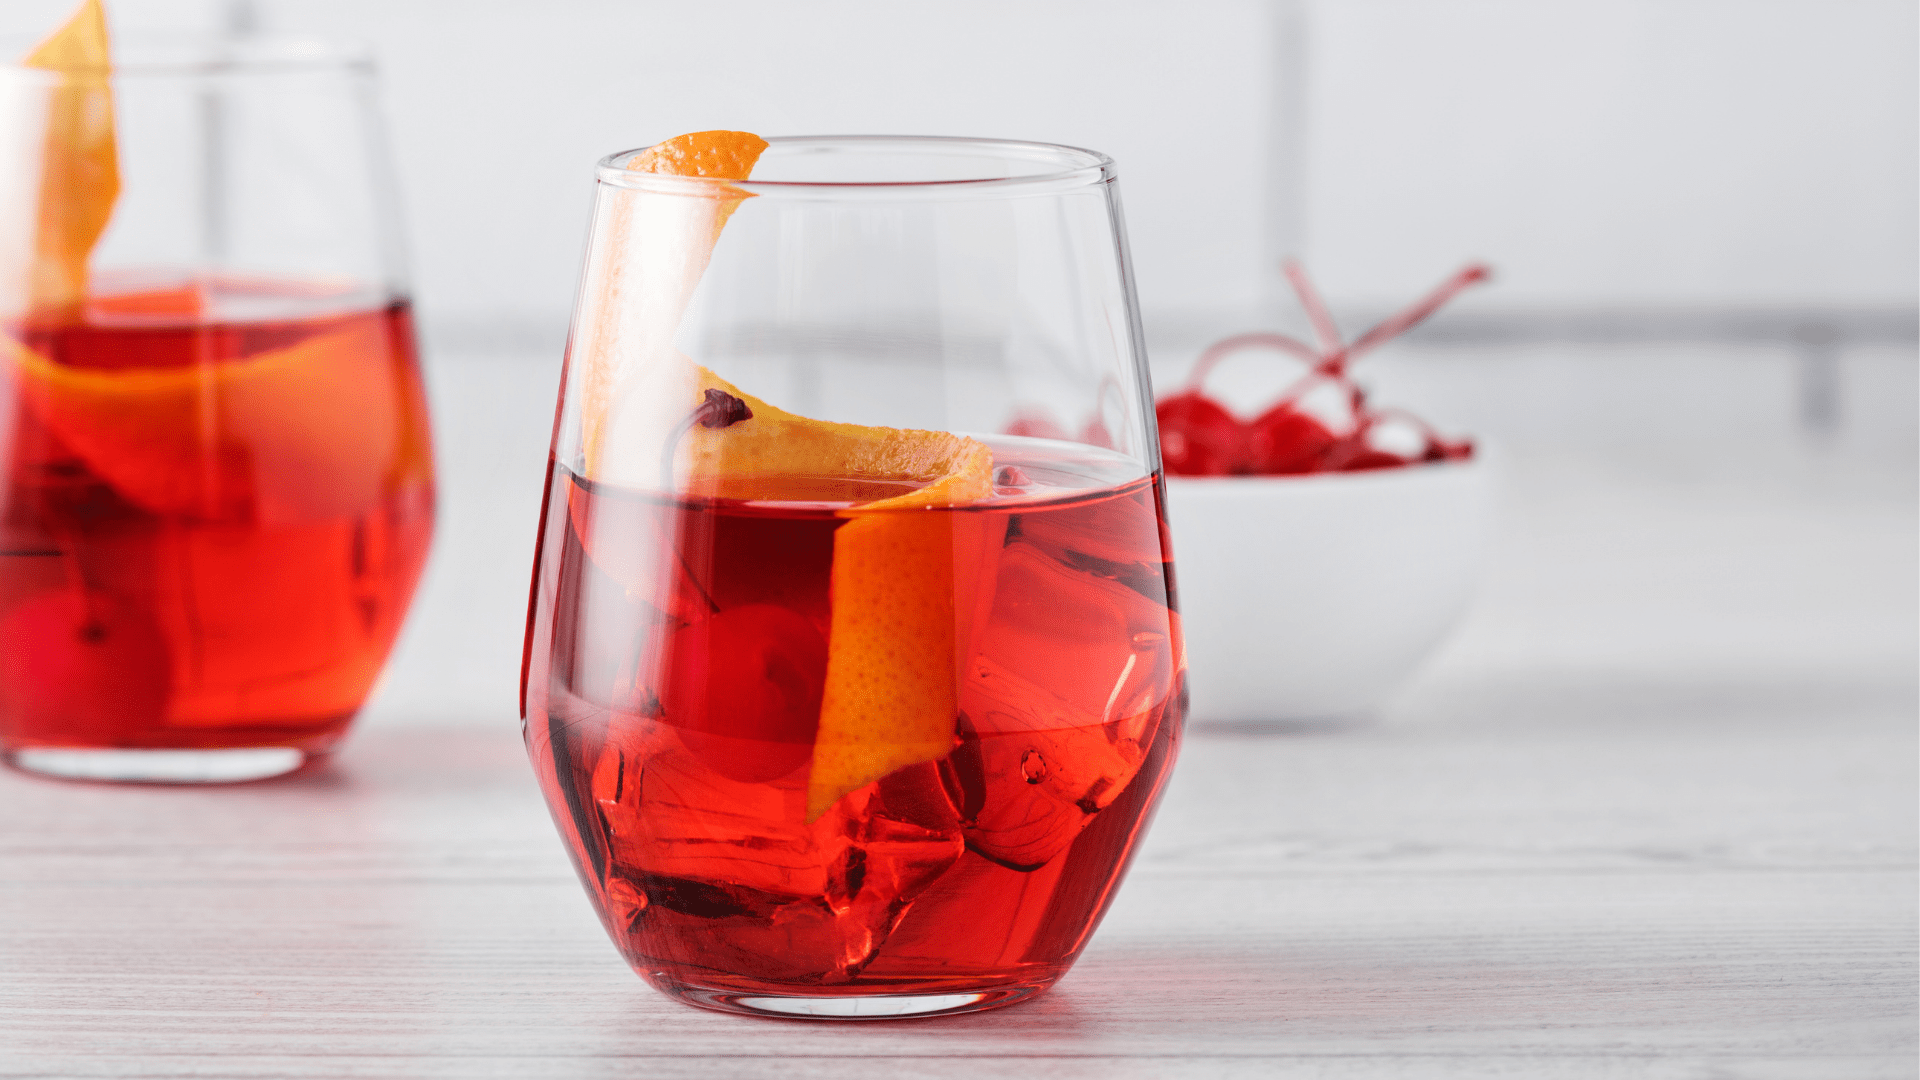 Negroni Cocktail